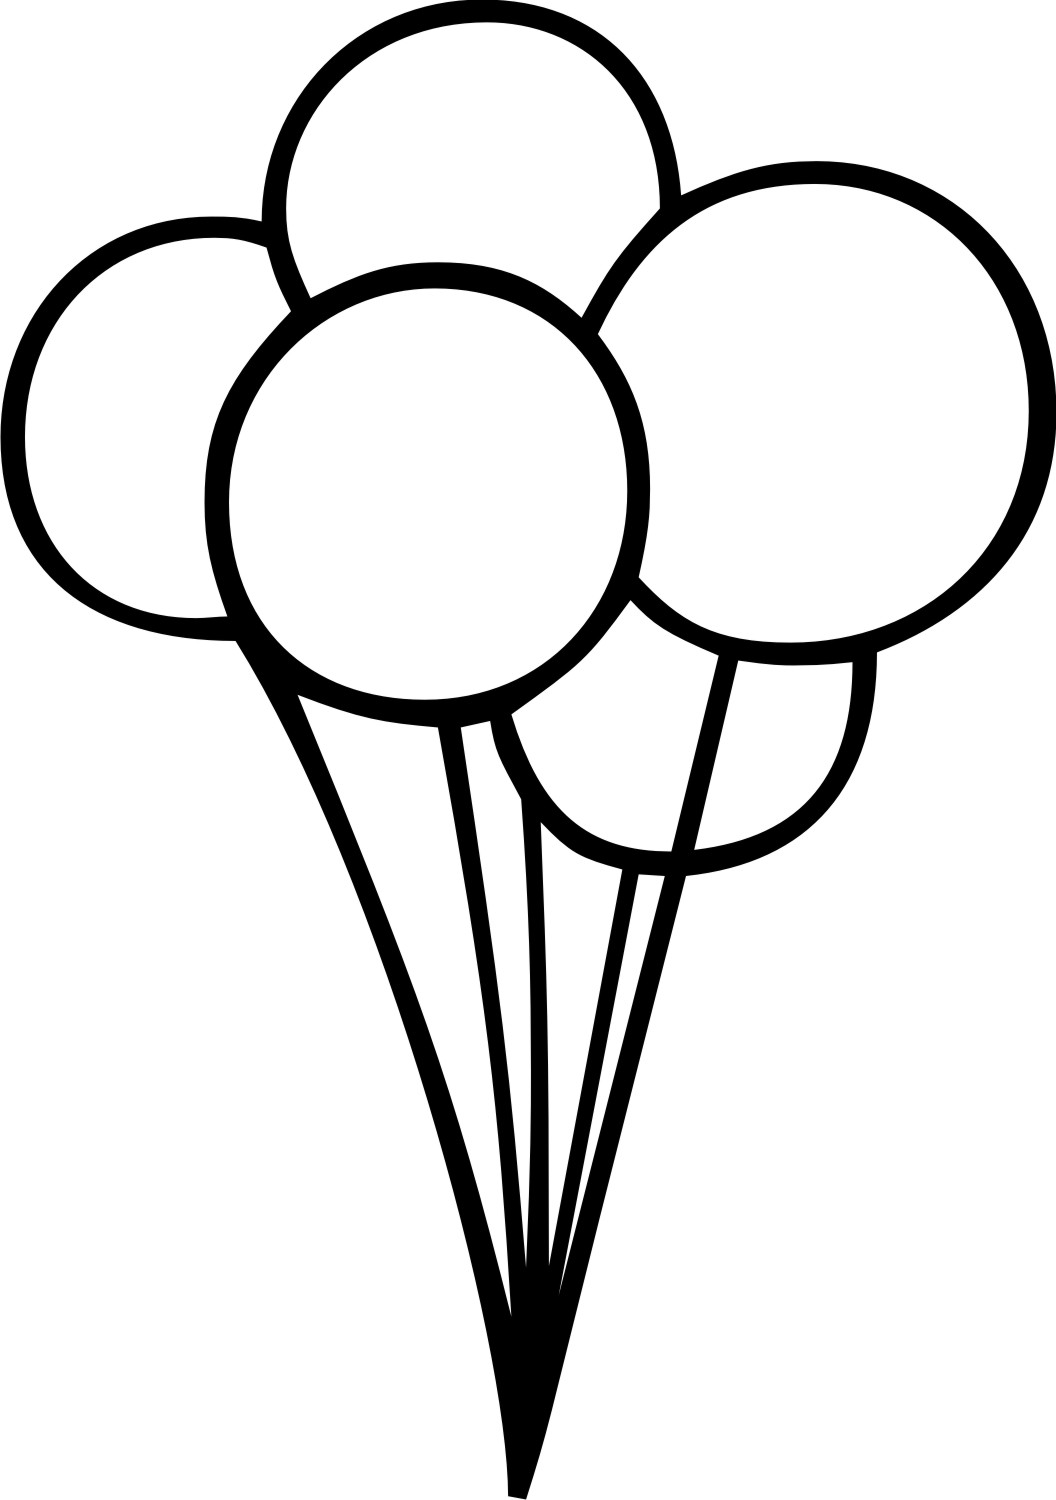 free black and white balloon clipart - photo #10